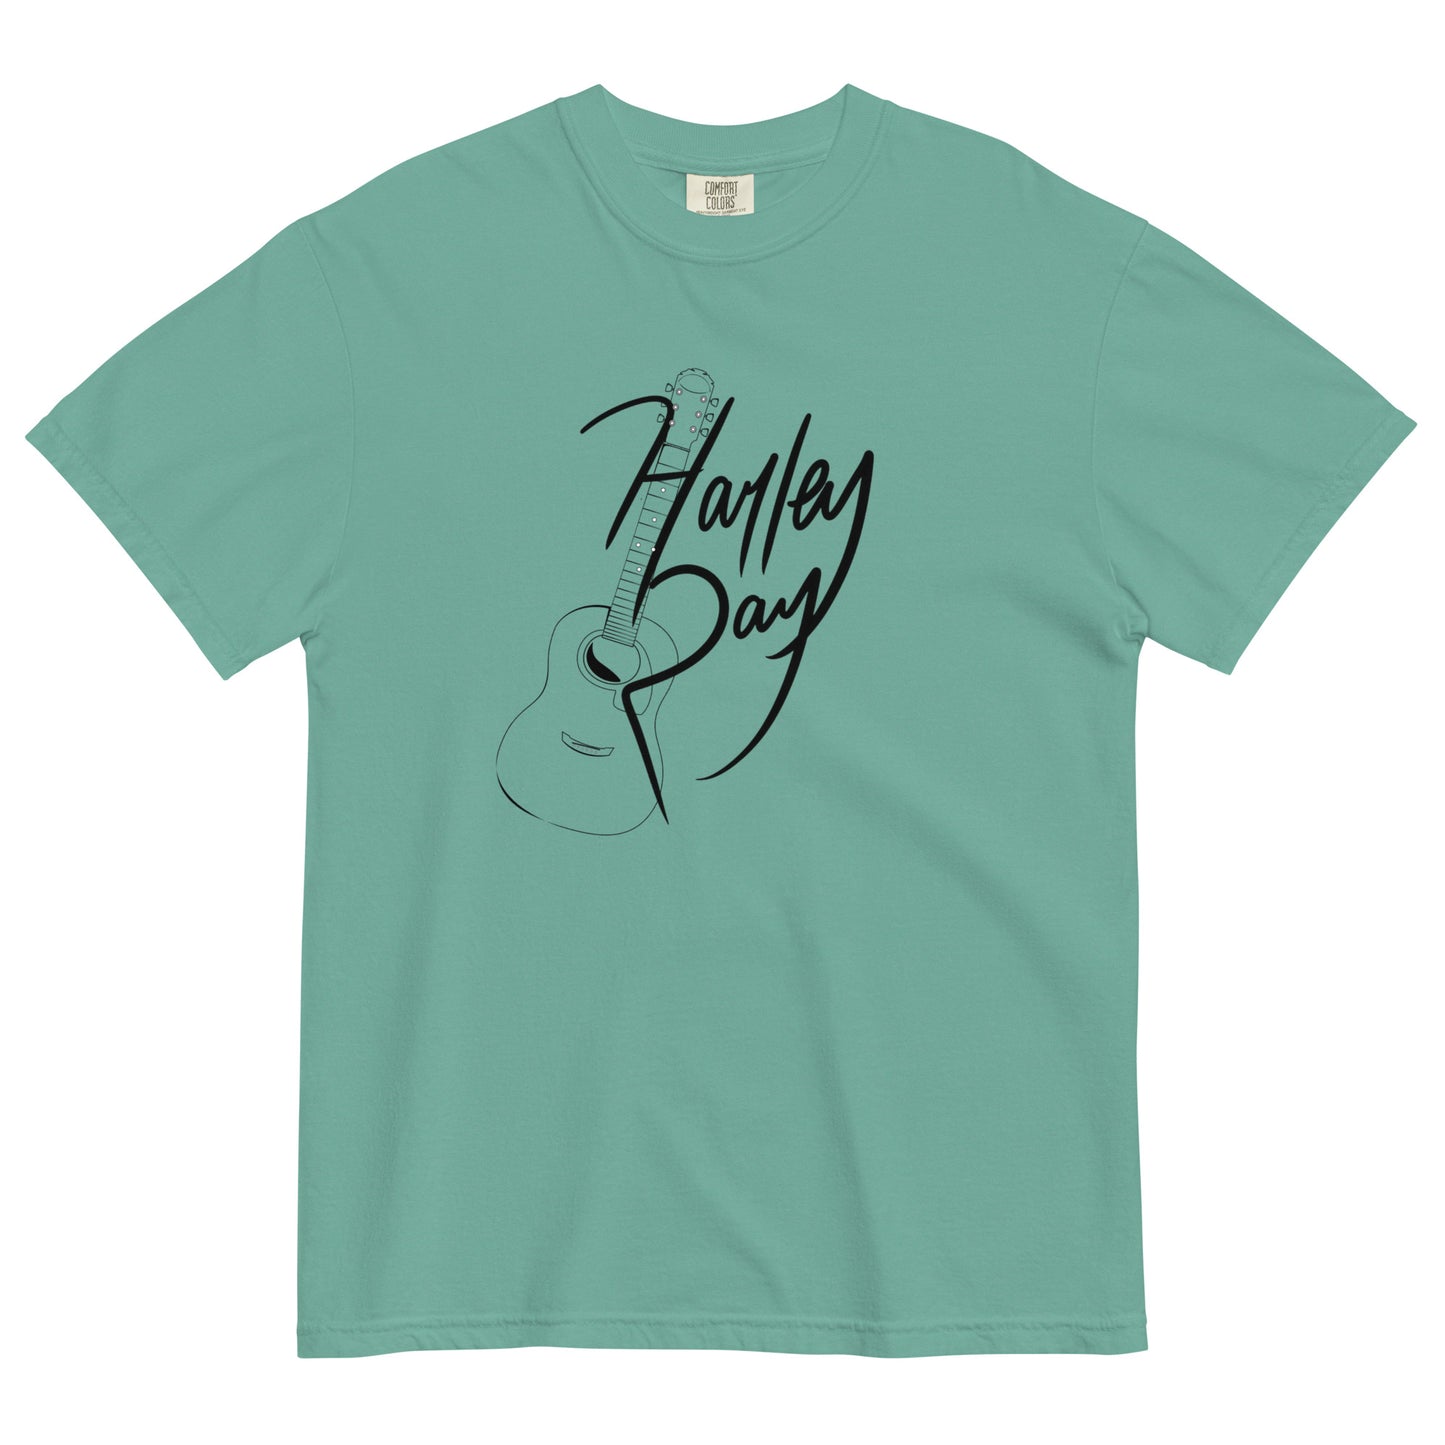 Harley Ray signature Unisex t-shirt